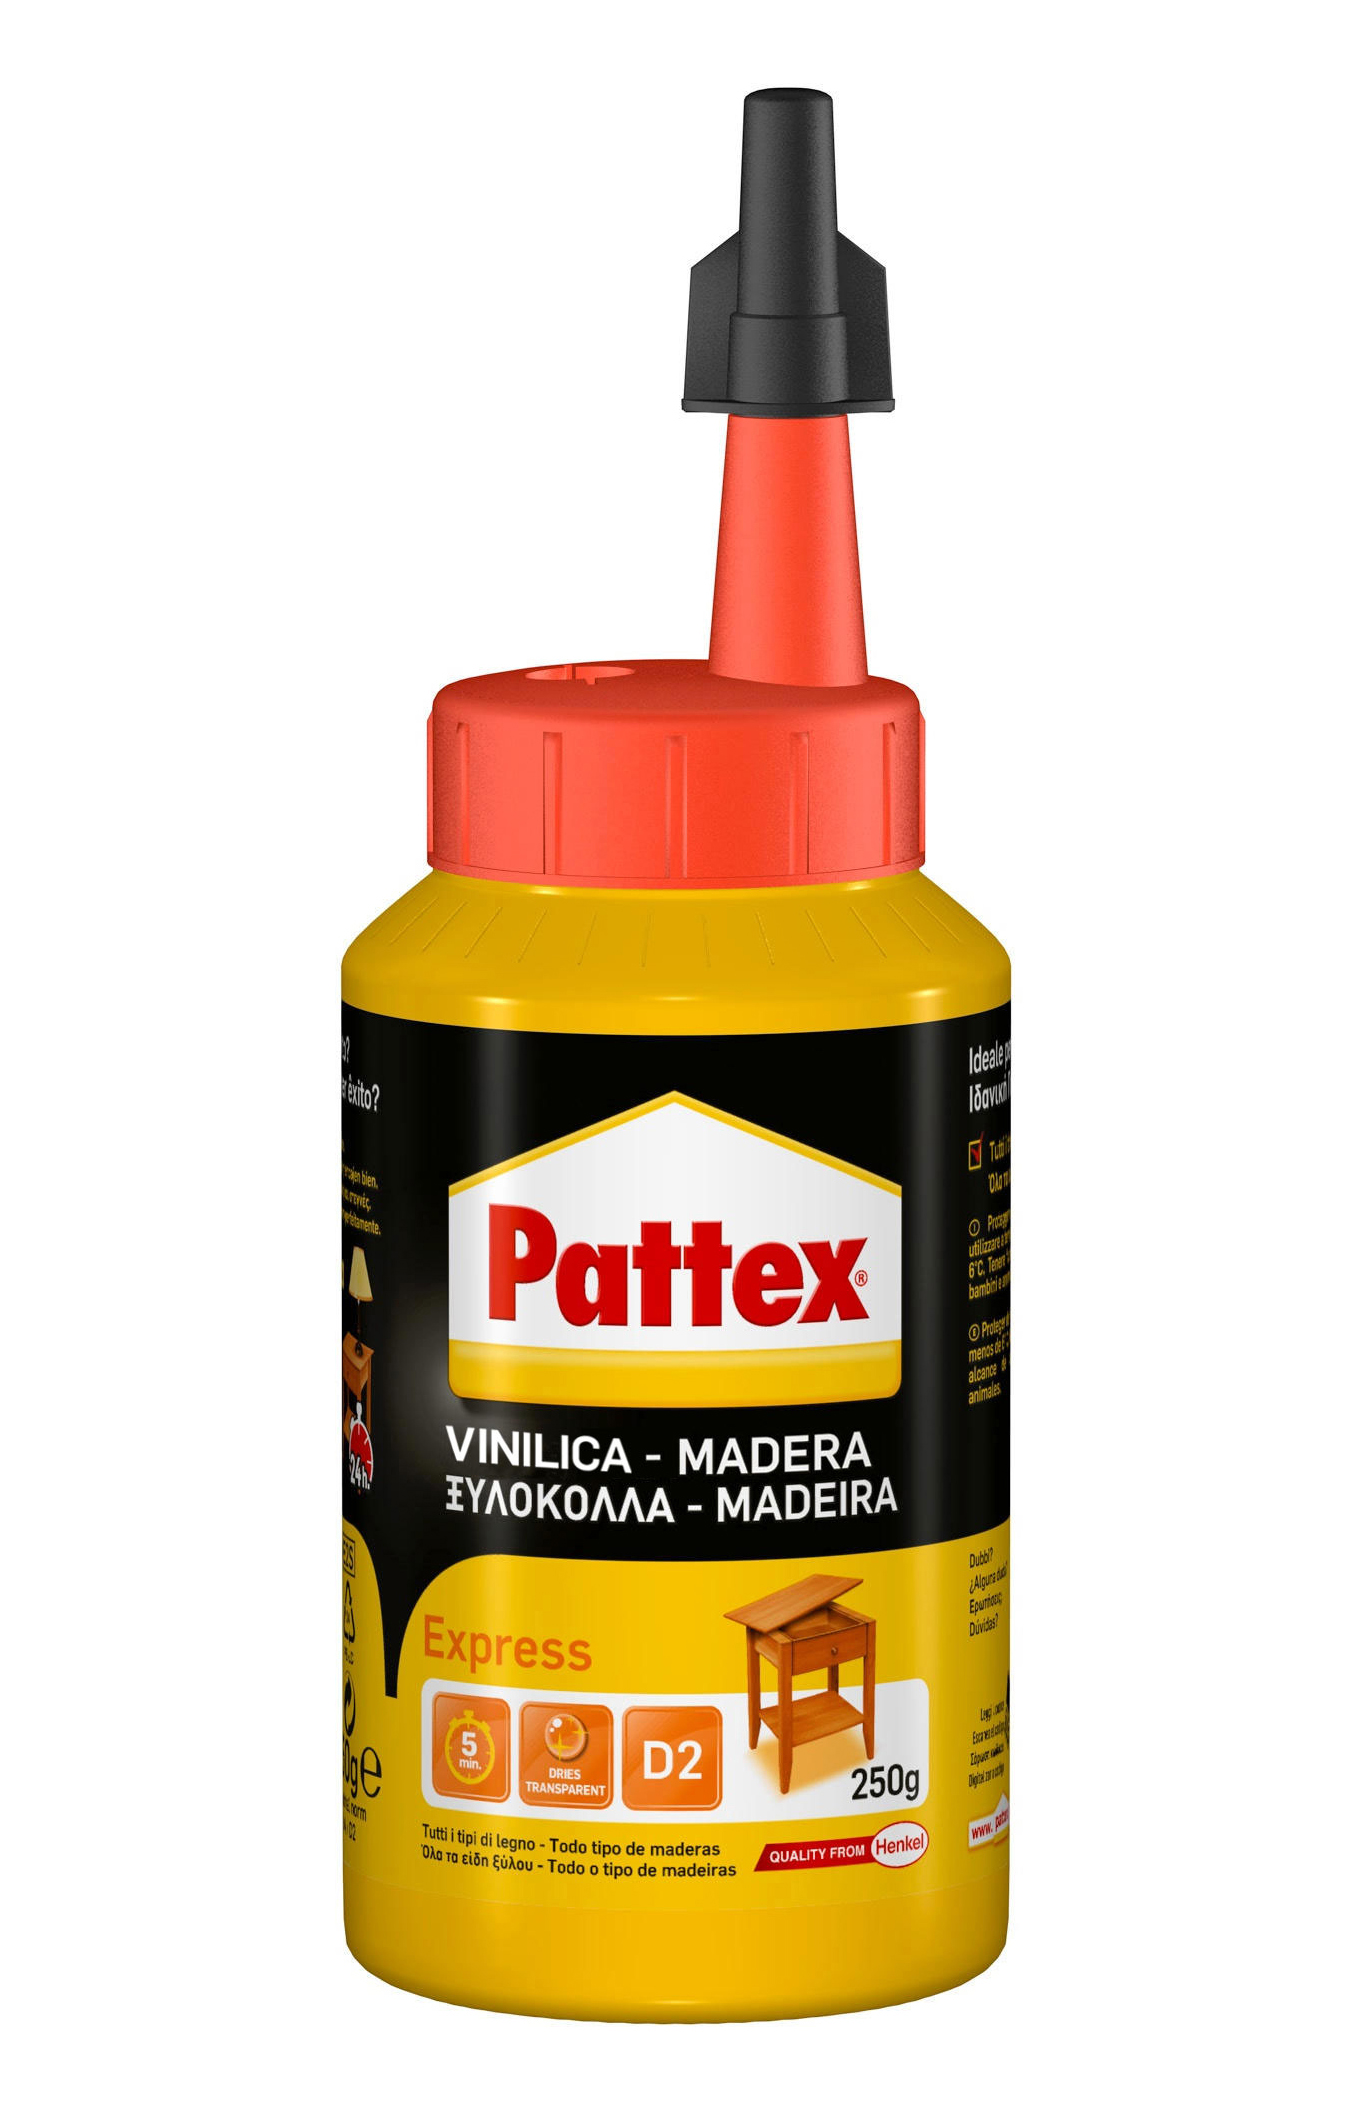 Pattex vinilica express  250g